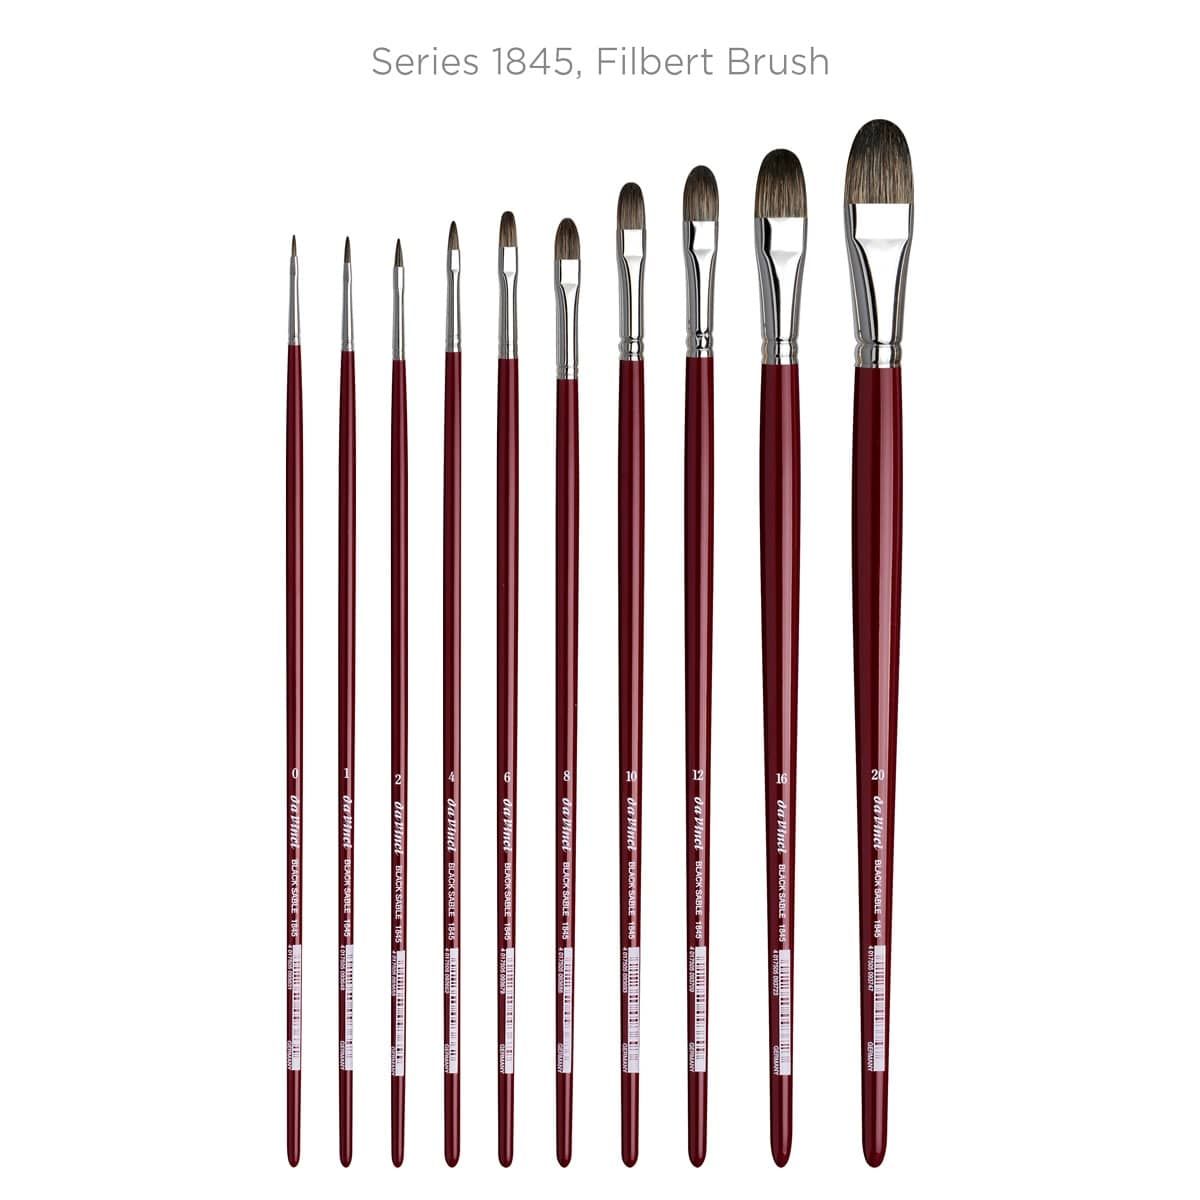 Series 1845, Filbert Brushes